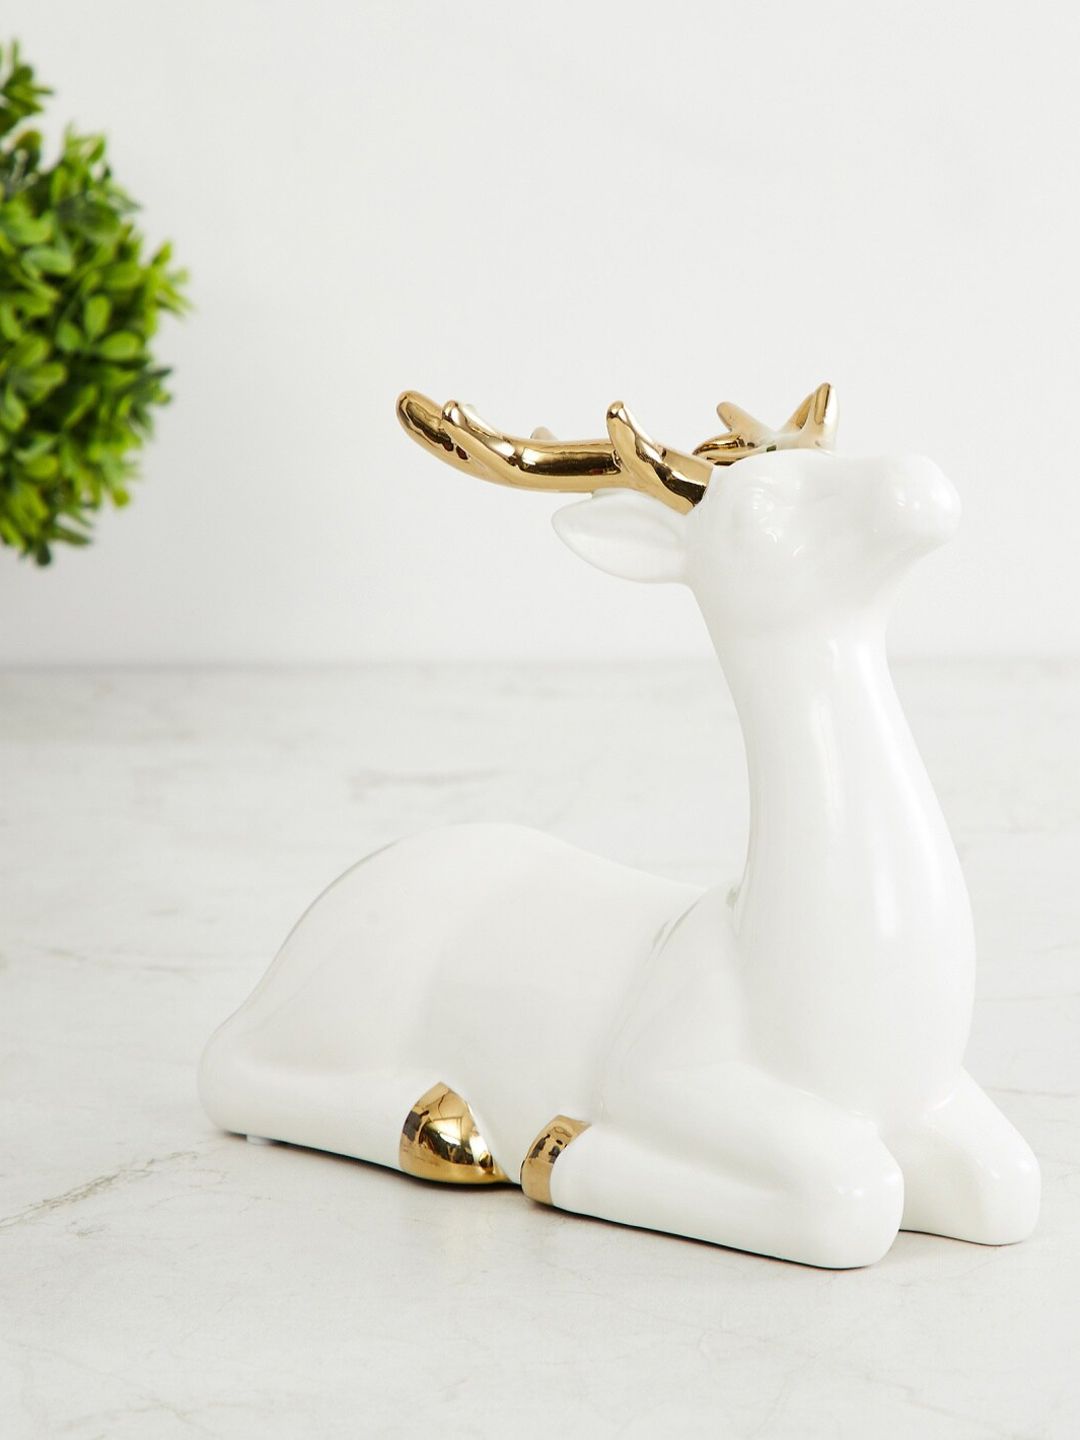 Home Centre White & Gold-Toned Ceramic Brighton Sitting Reindeer Figurine Showpiece Price in India